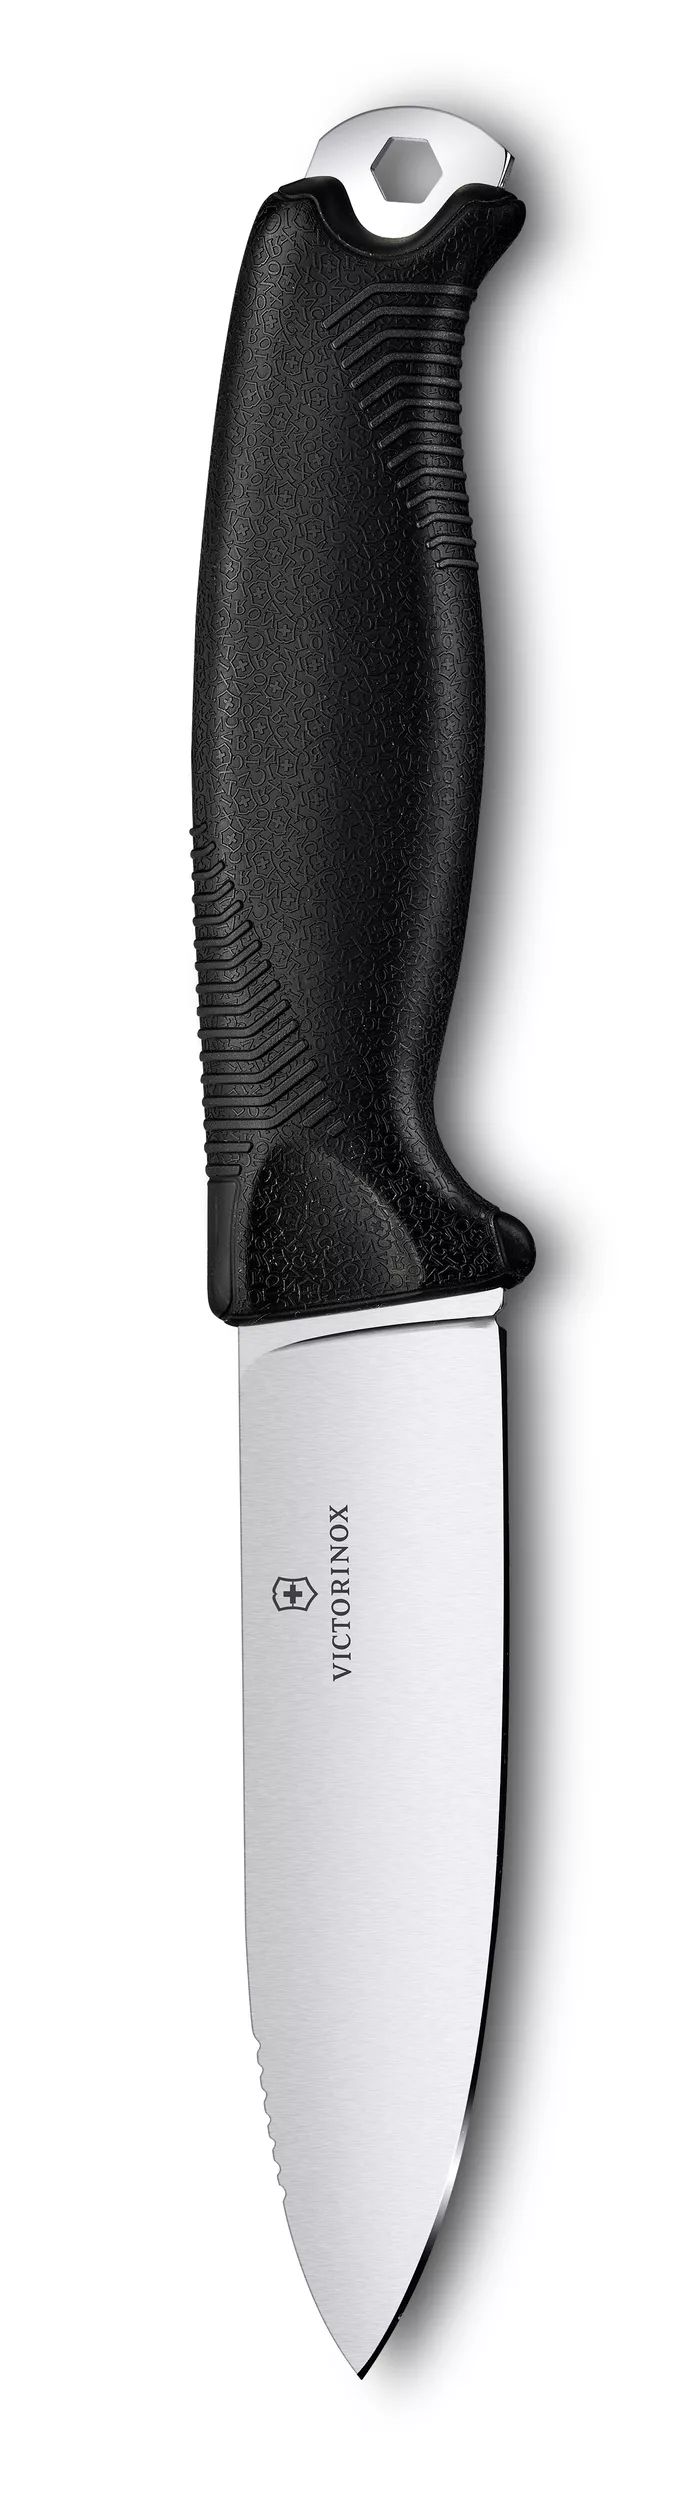 Victorinox Swiss Army 54943 Compact Knife, Black, 91mm